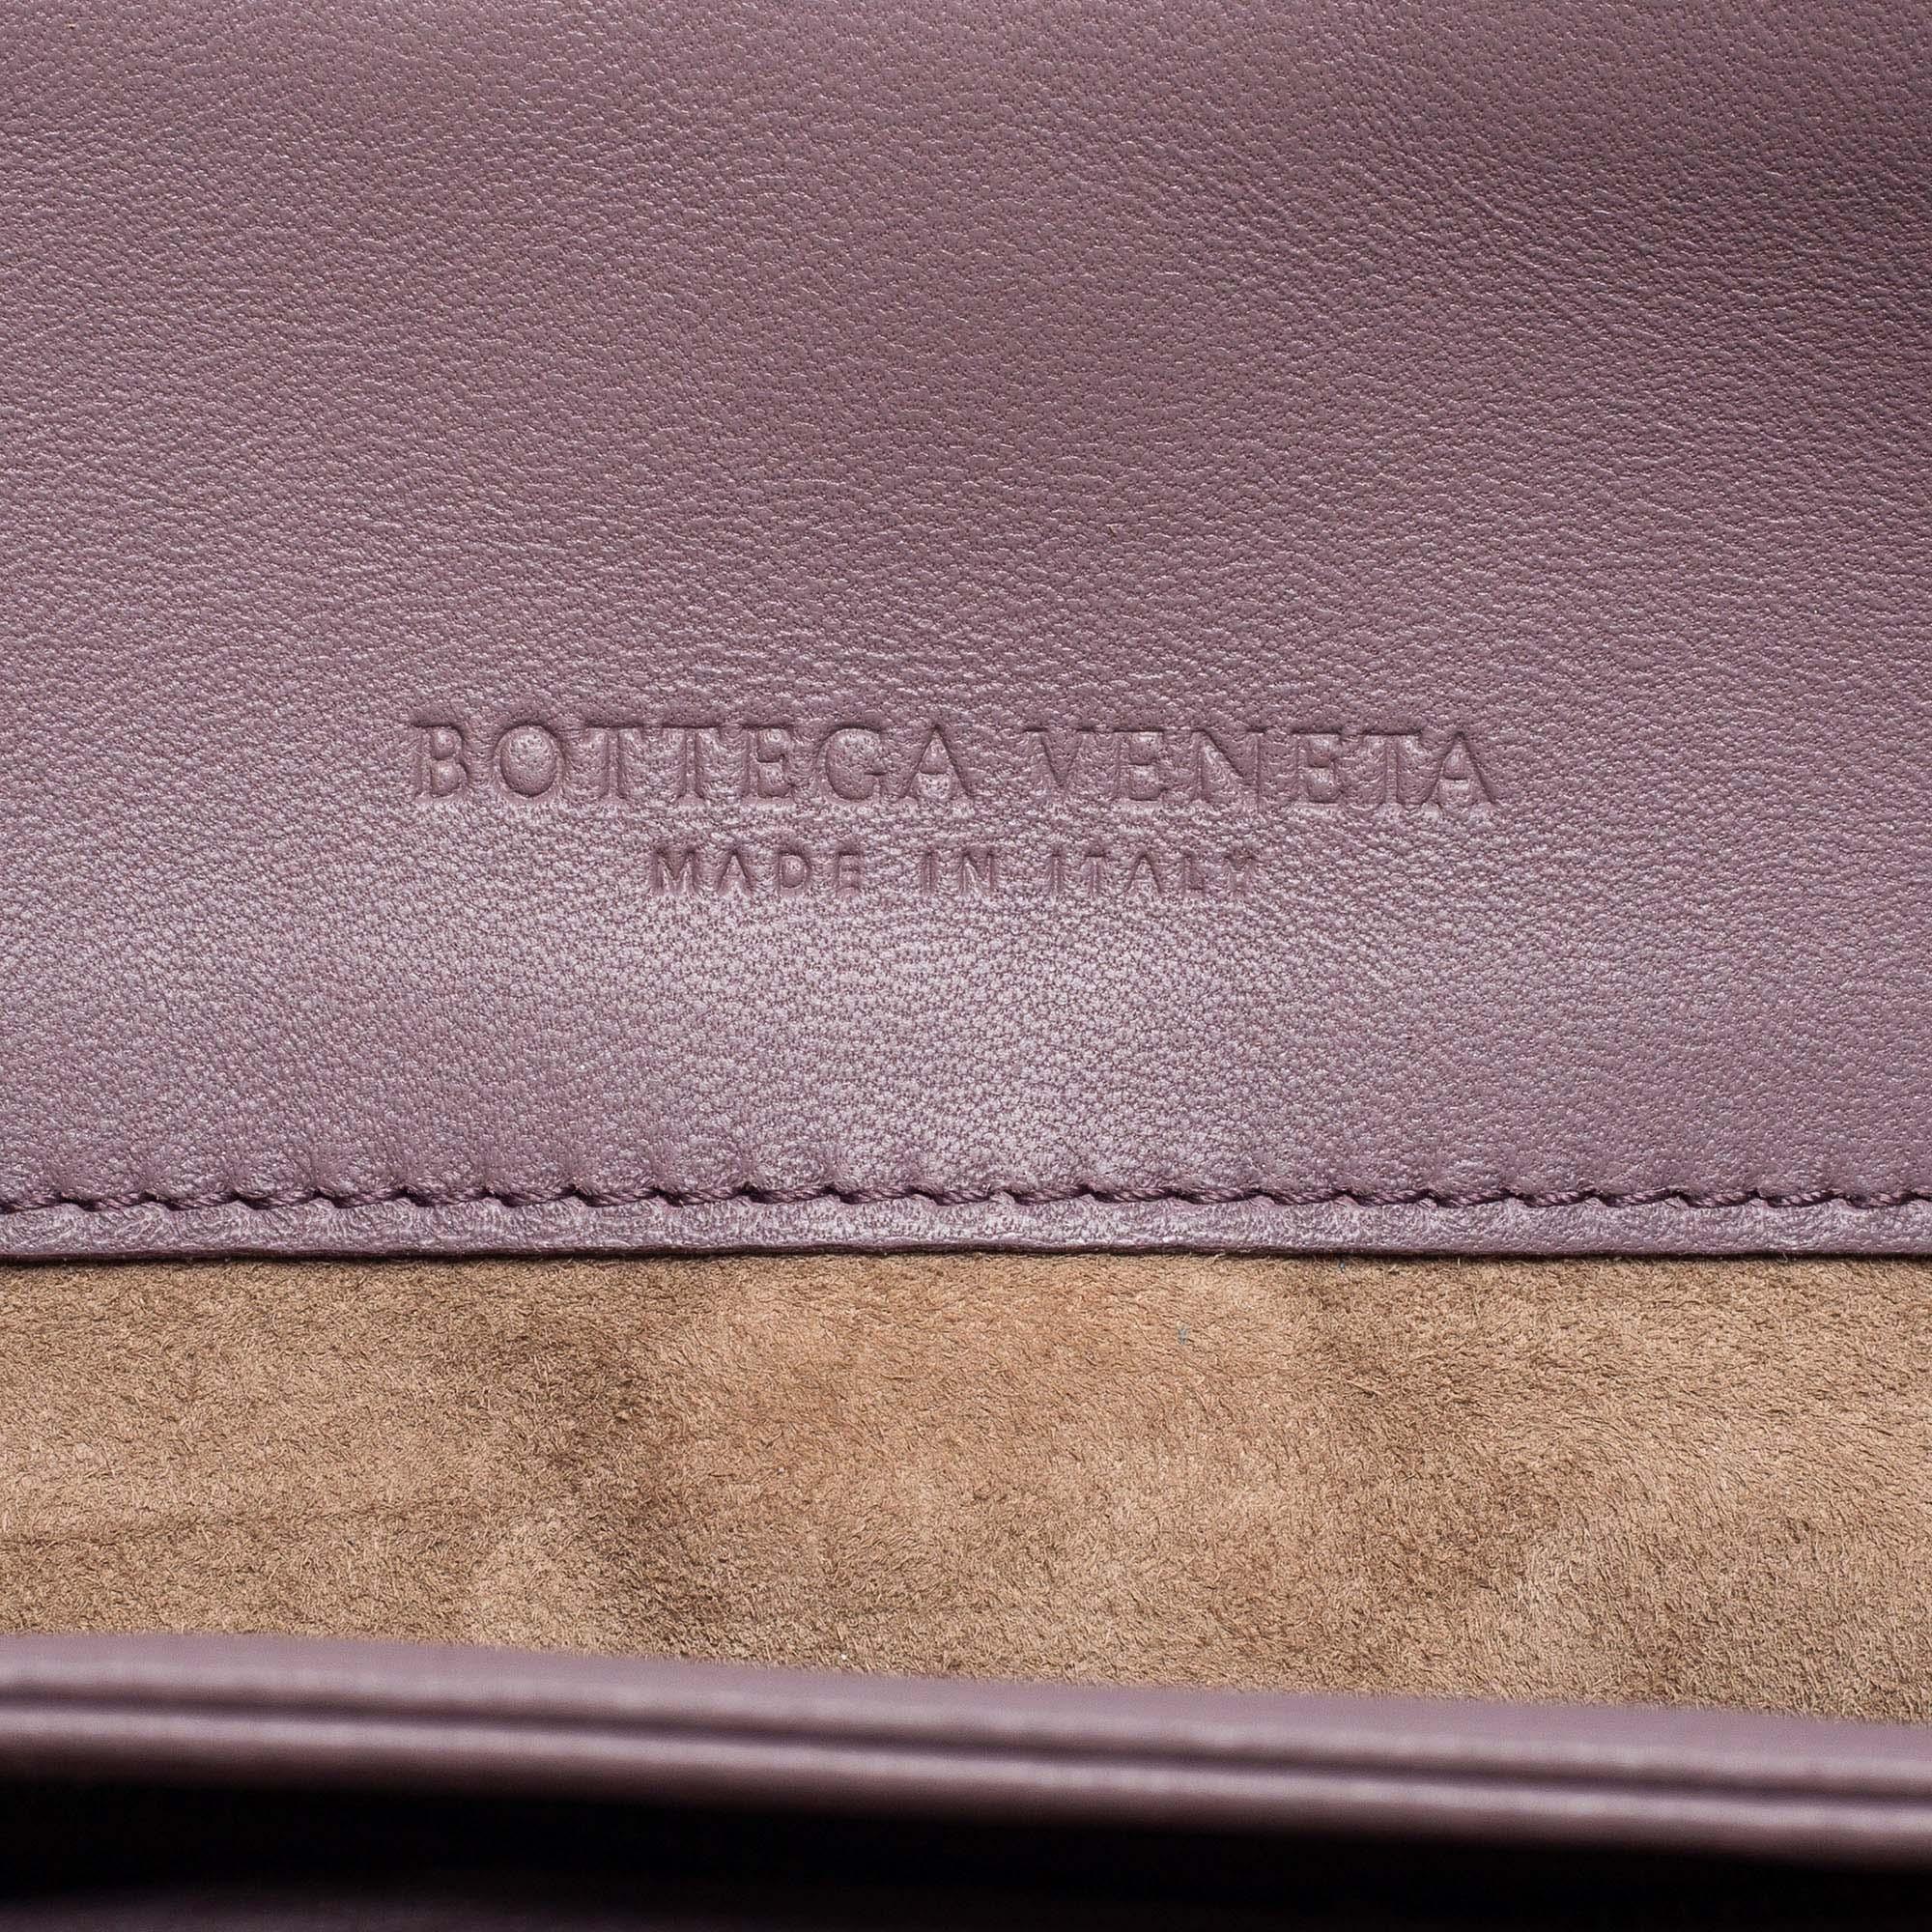 Bottega Veneta Purple Intrecciato Leather Olimpia Shoulder Bag 9